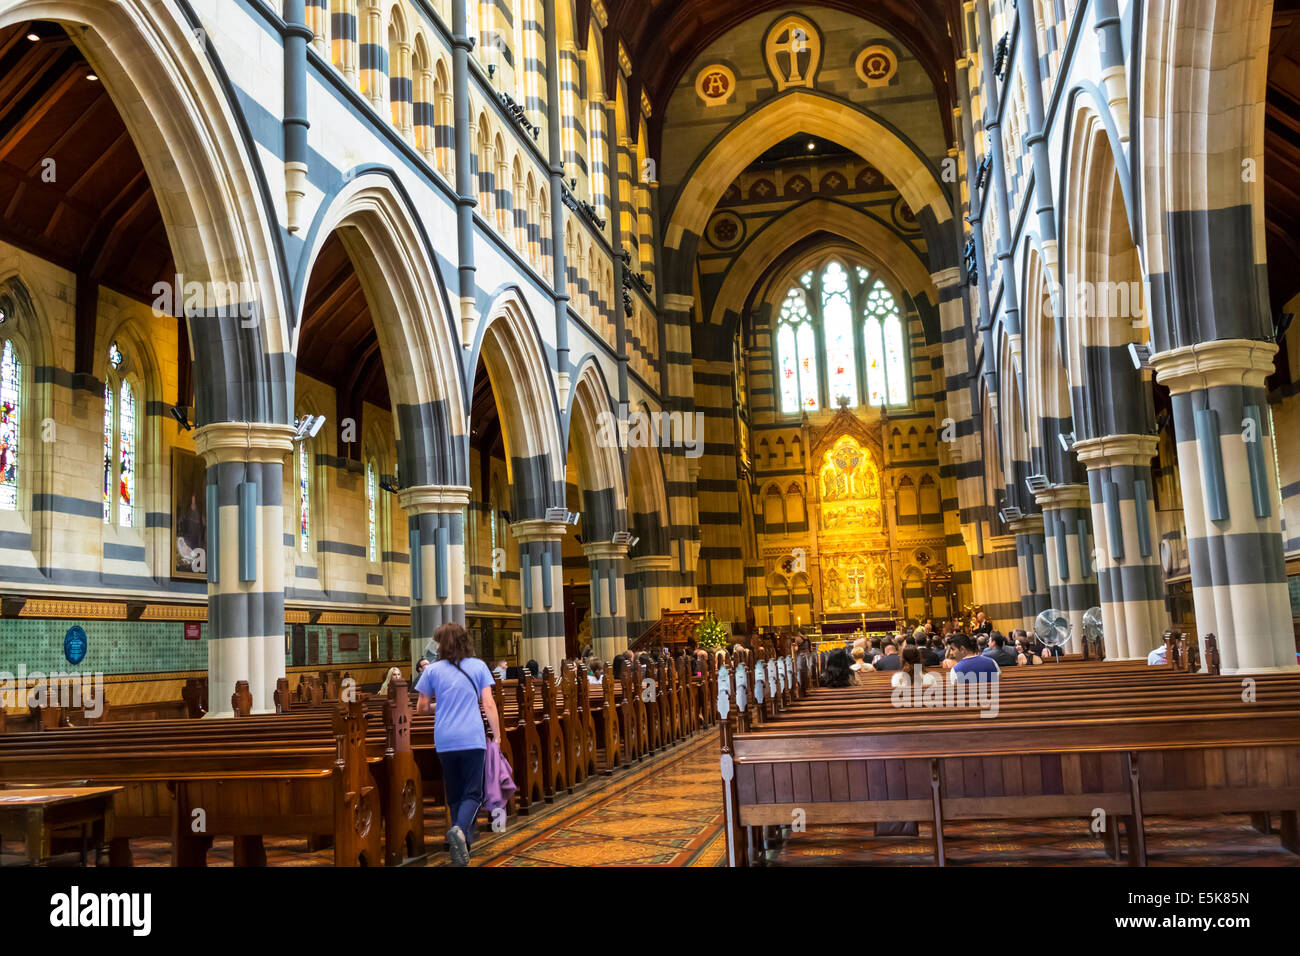 Melbourne Australia, Swanston Street, St Paul's Cathedral, interno, Anglicano, AU140322030 Foto Stock